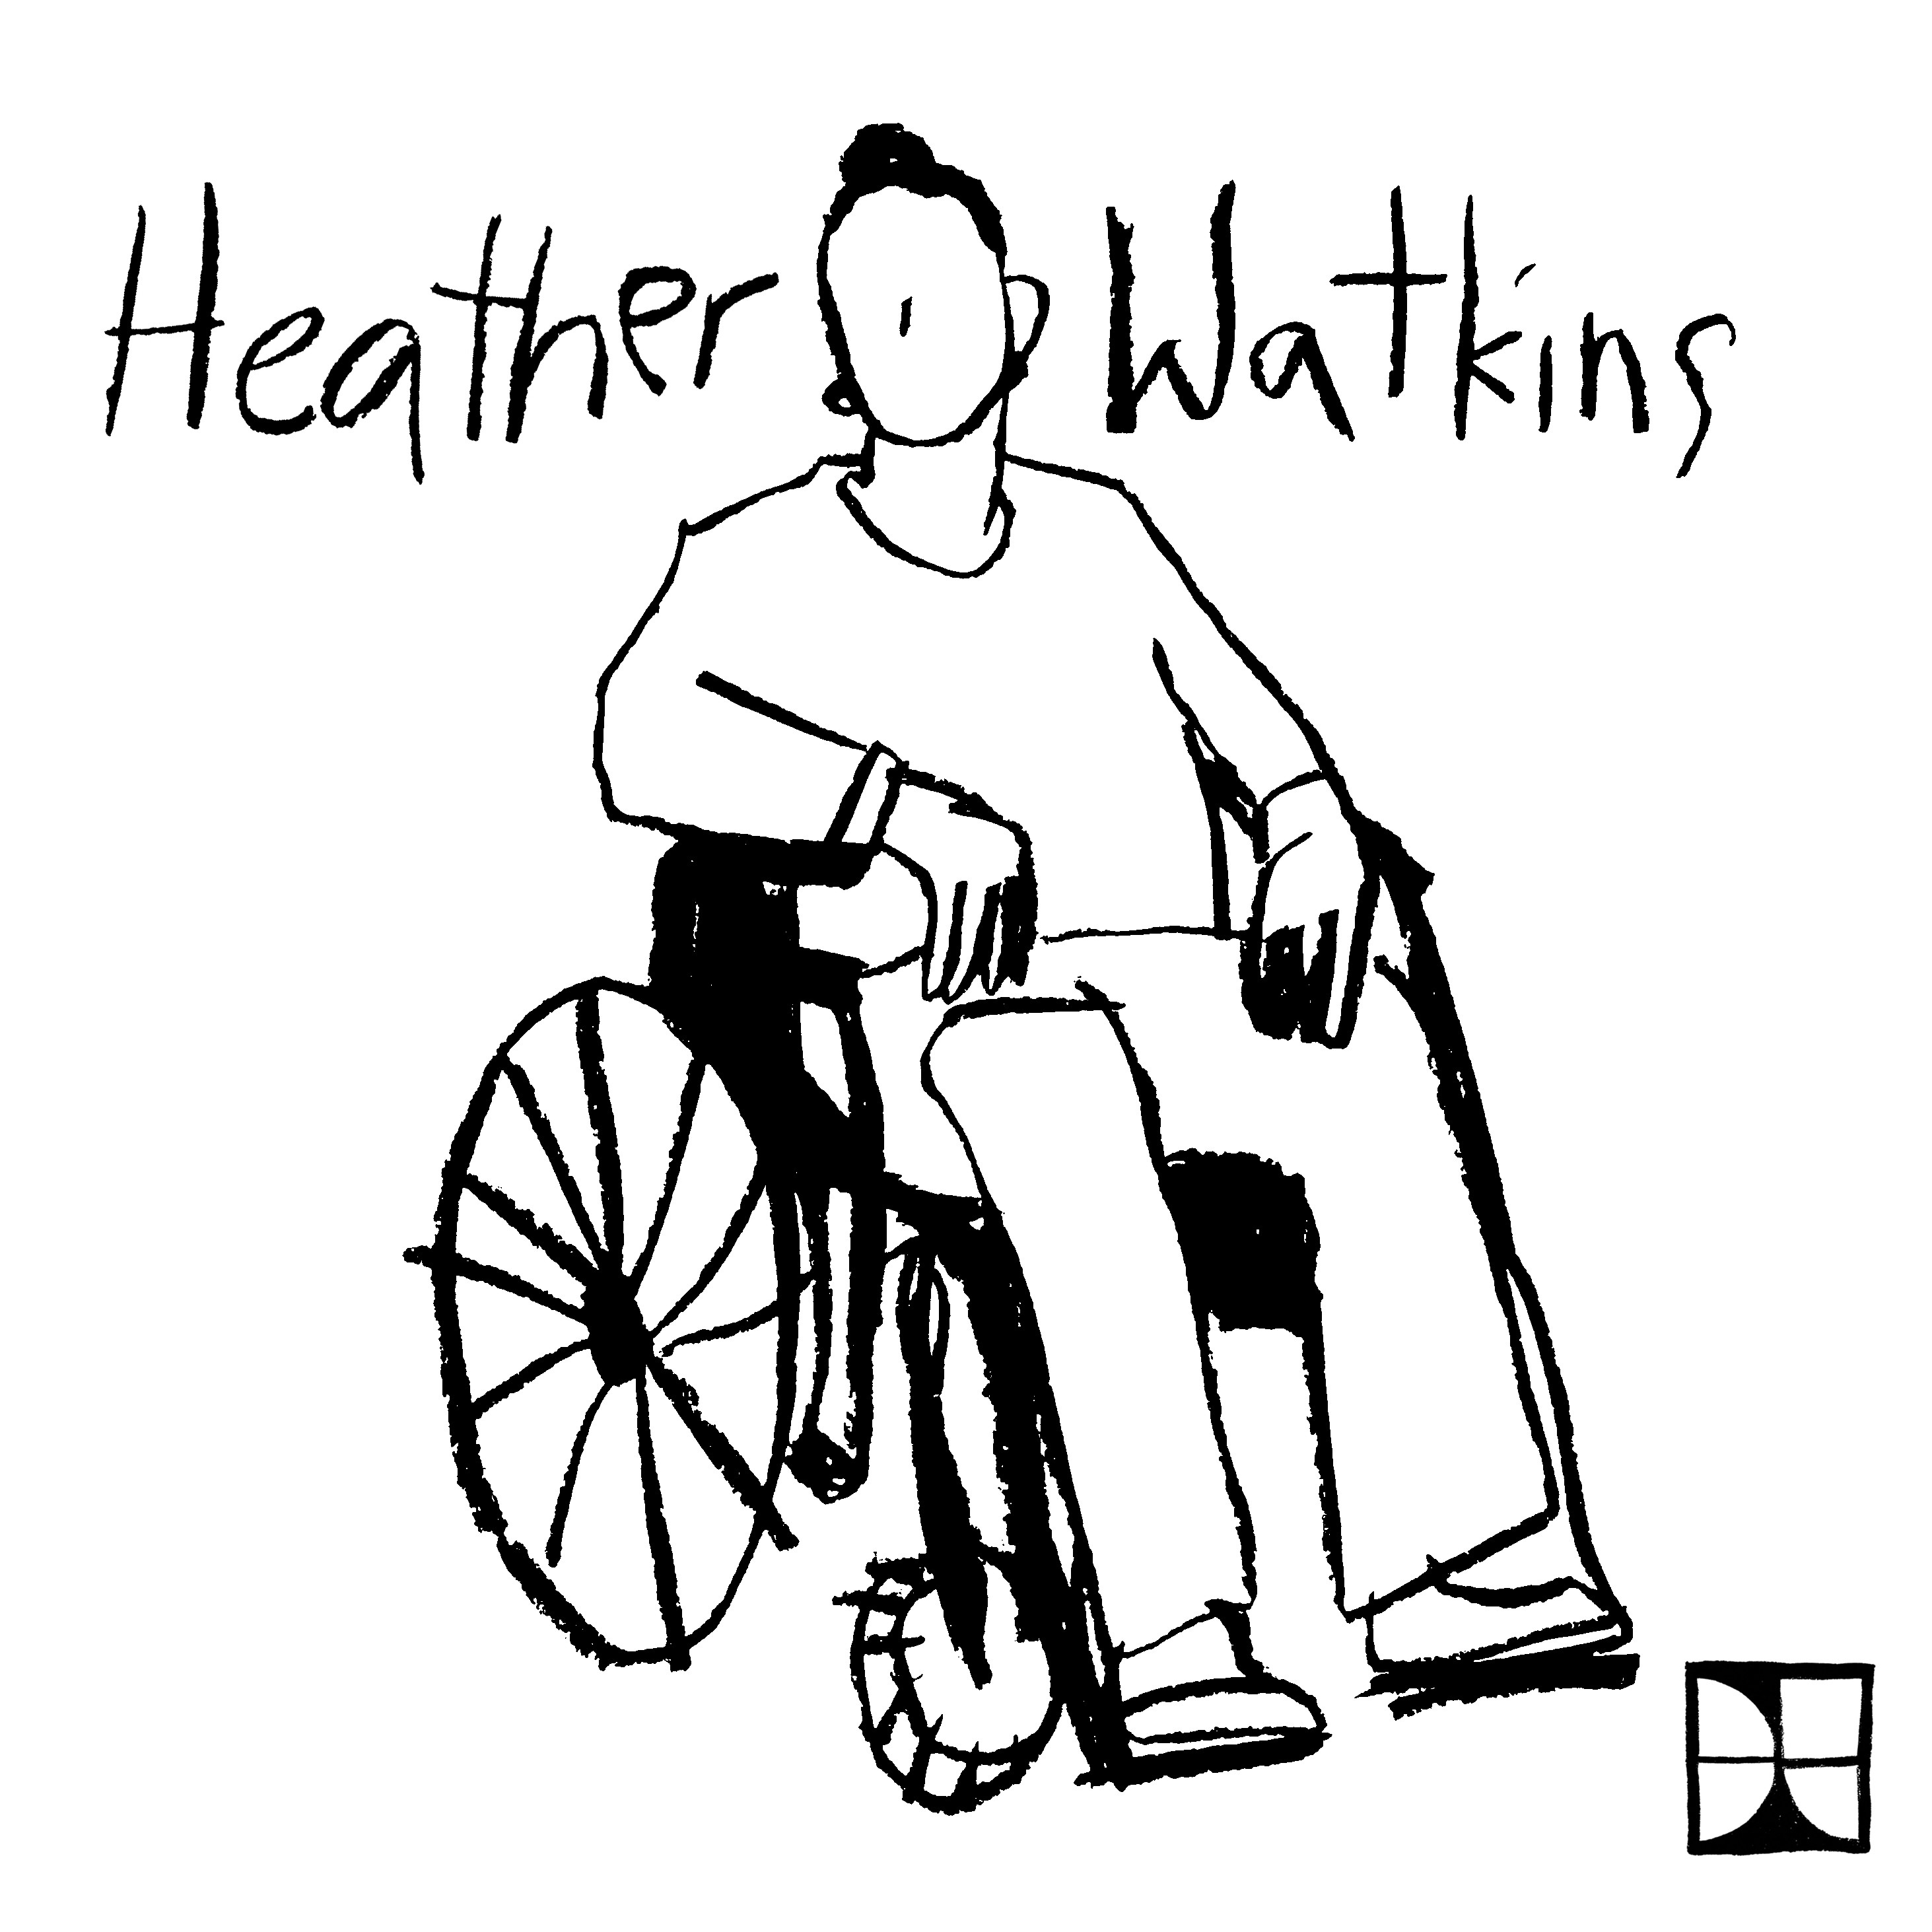 Heather Watkins drawn in black and white